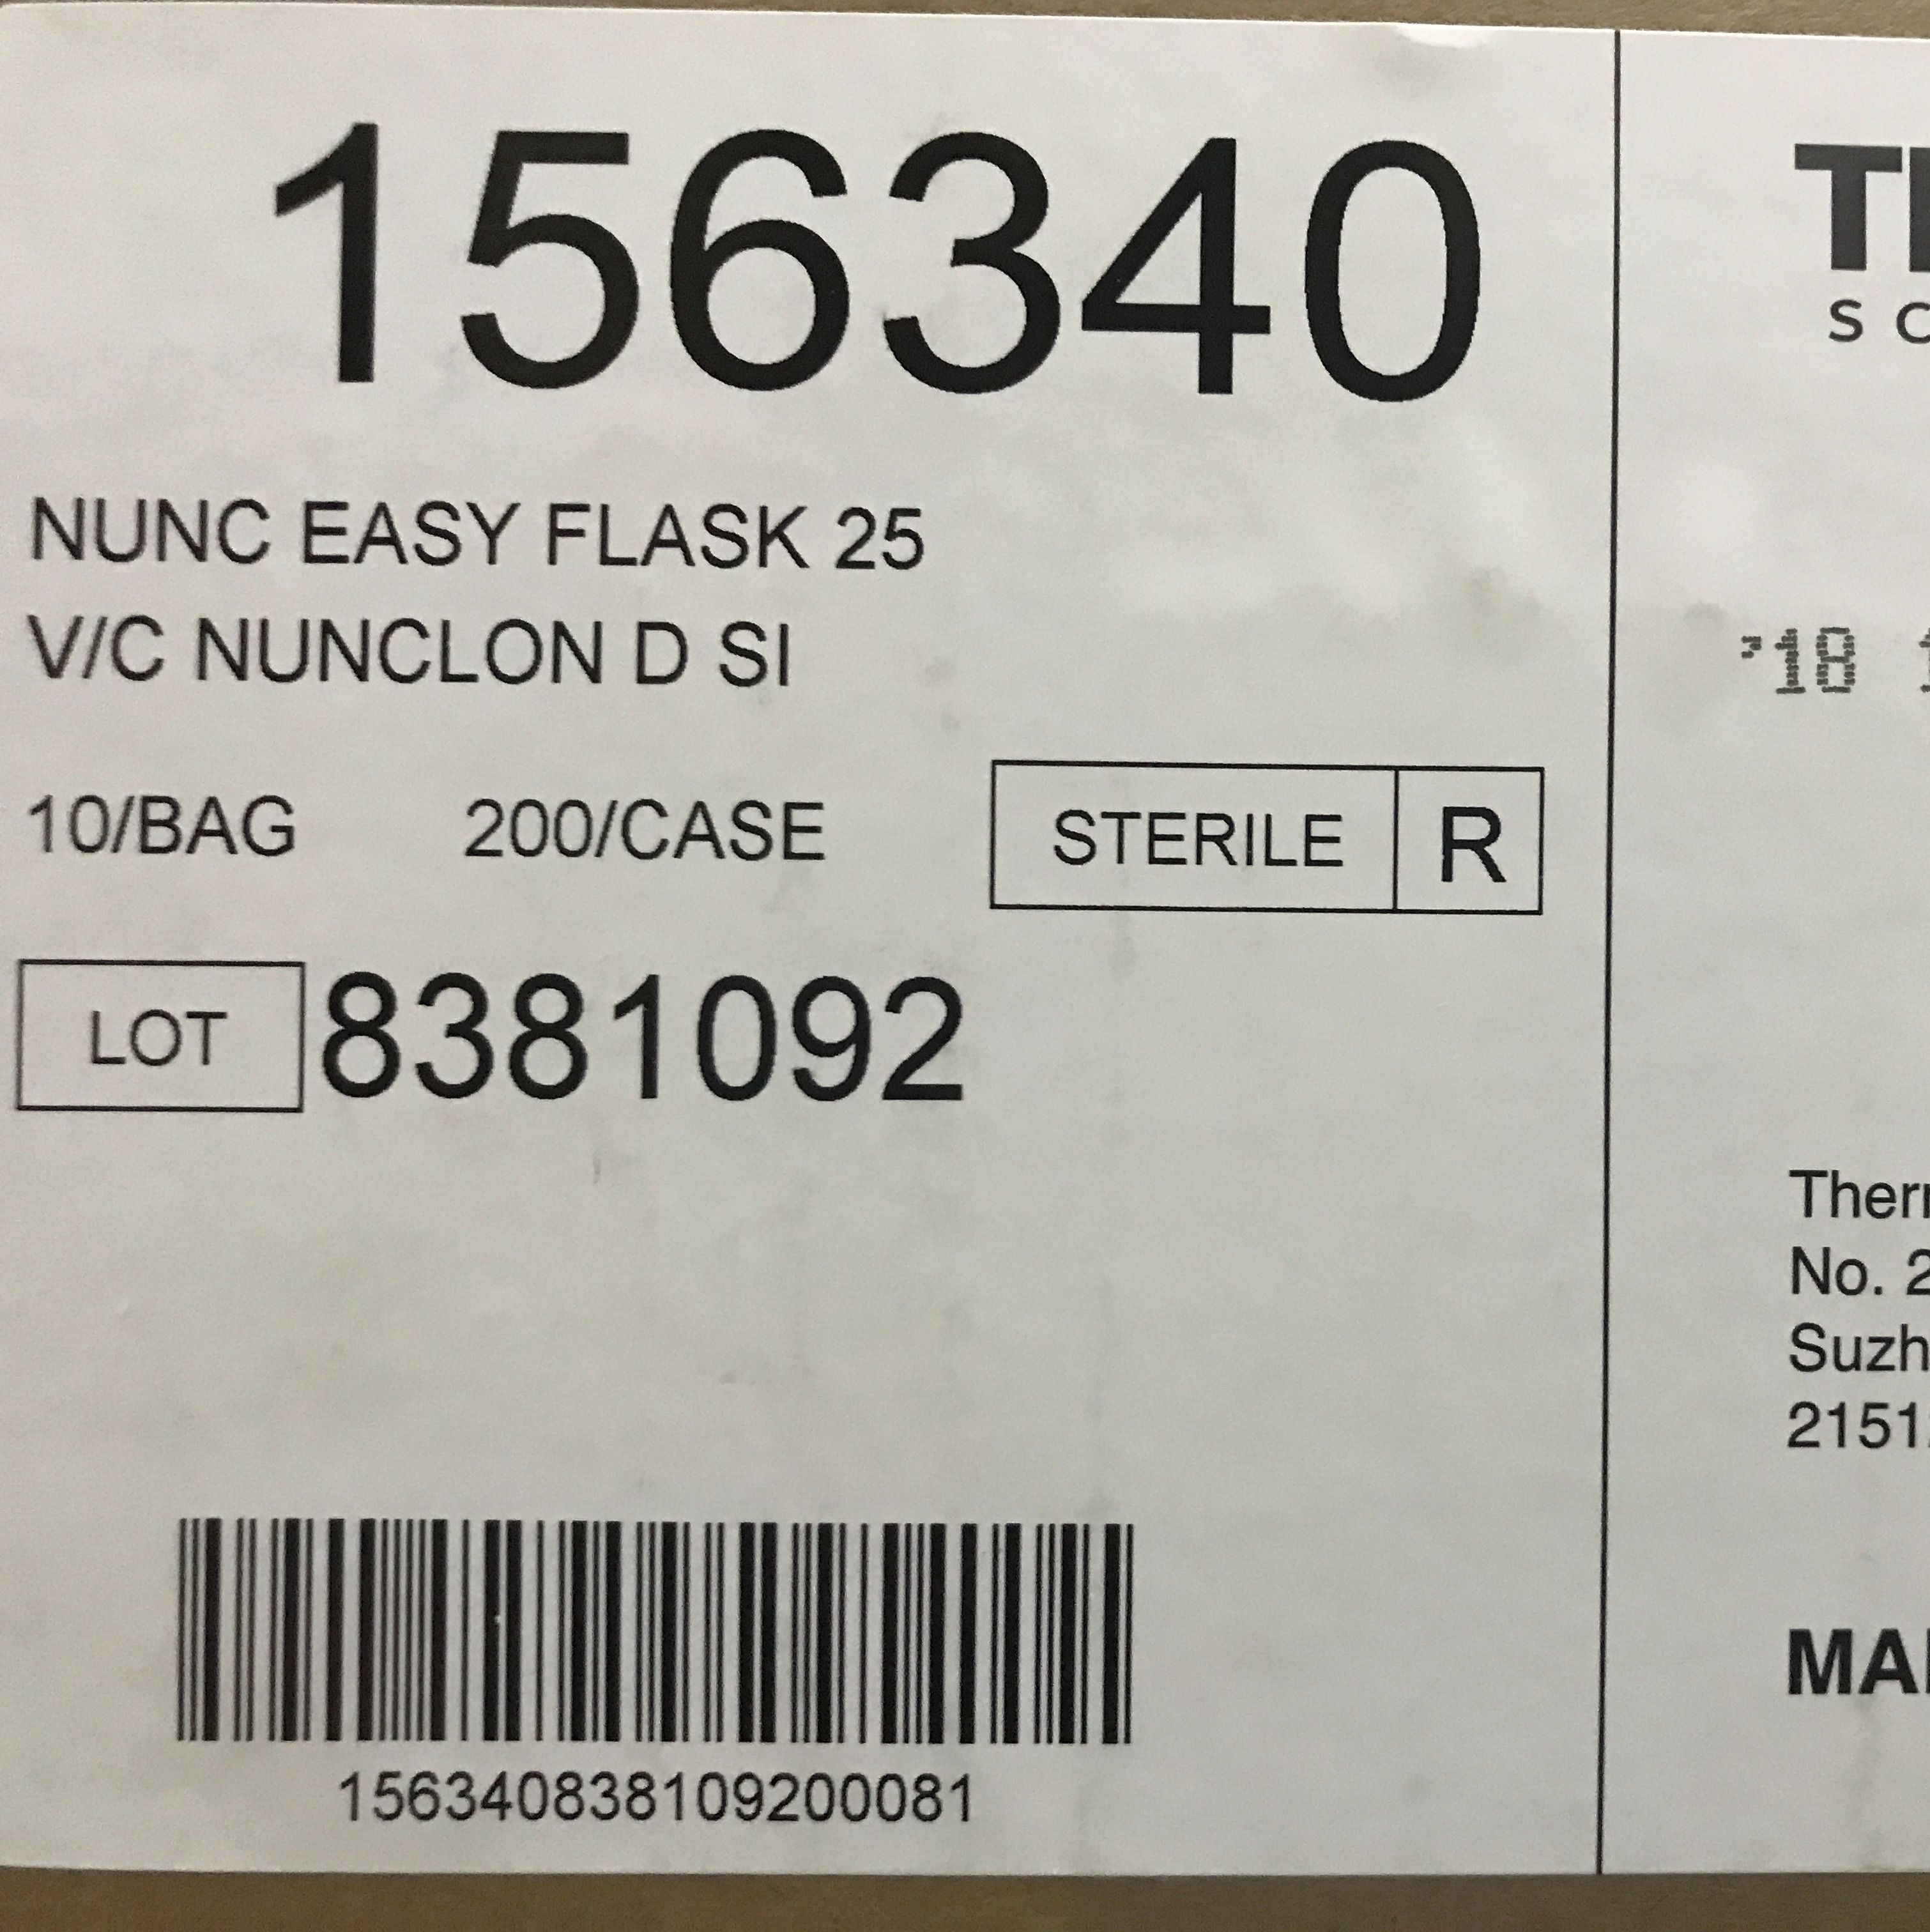 Nunc货号156340现货25cm²细胞培养瓶(透气/密封)13611631389上海睿安生物